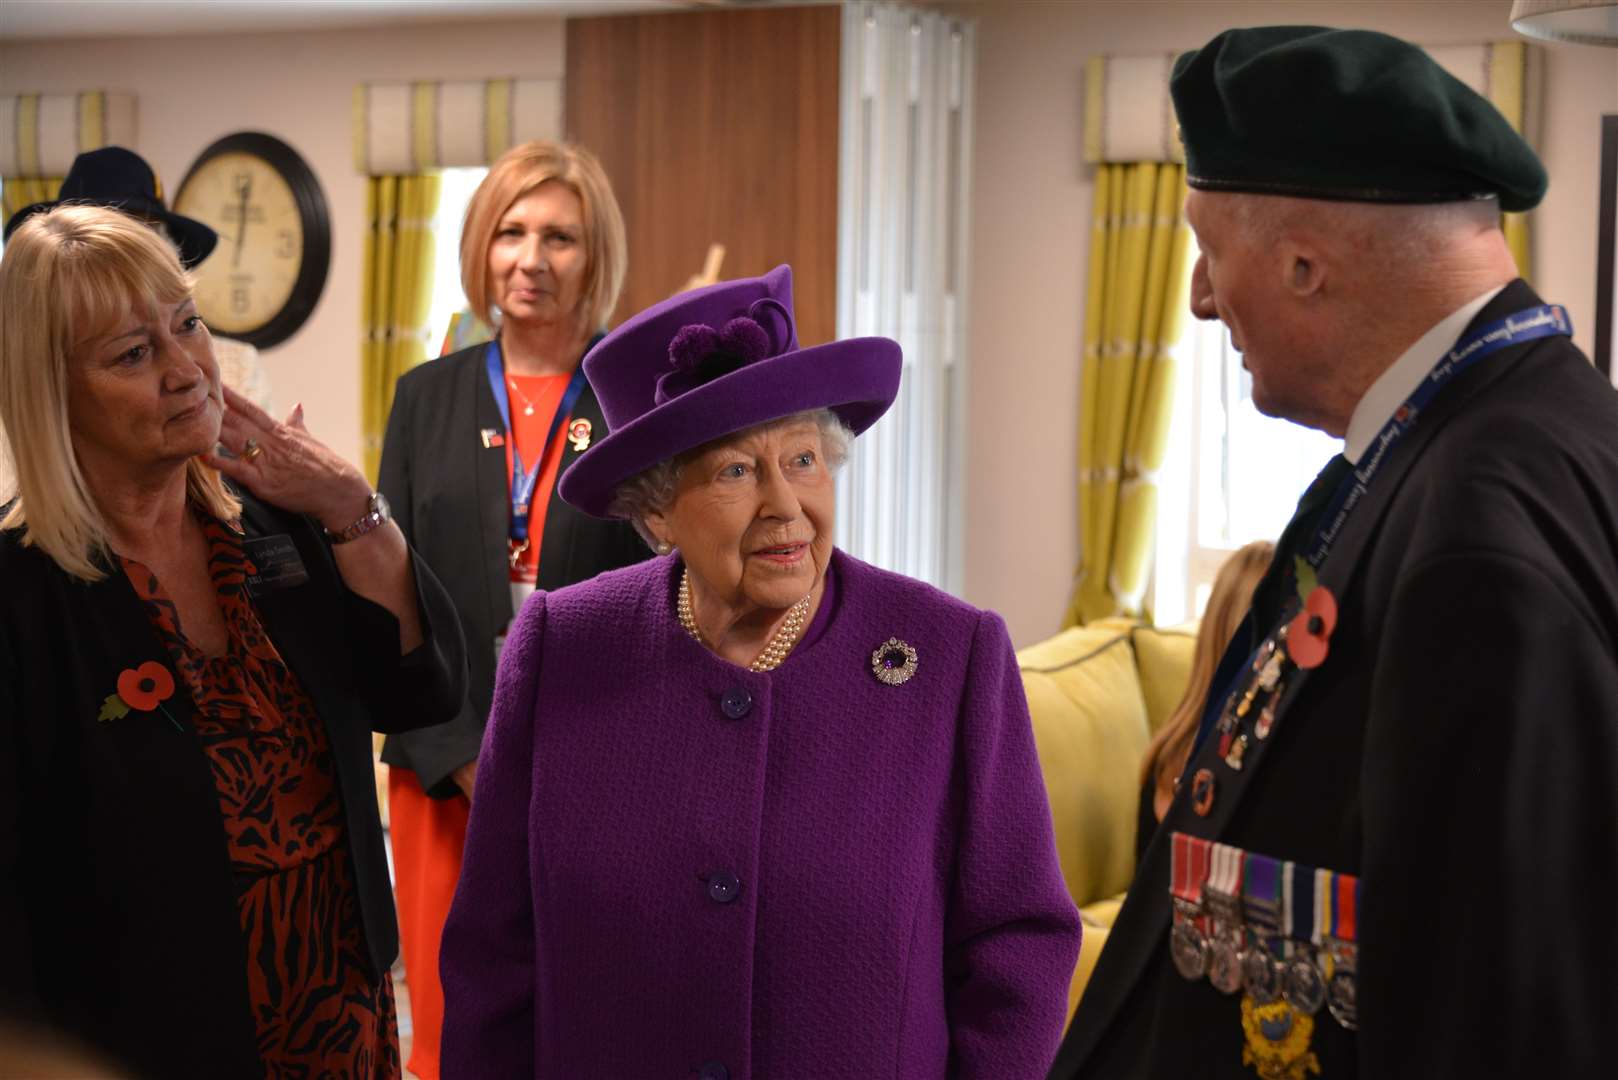 George Bradford meeting the Queen